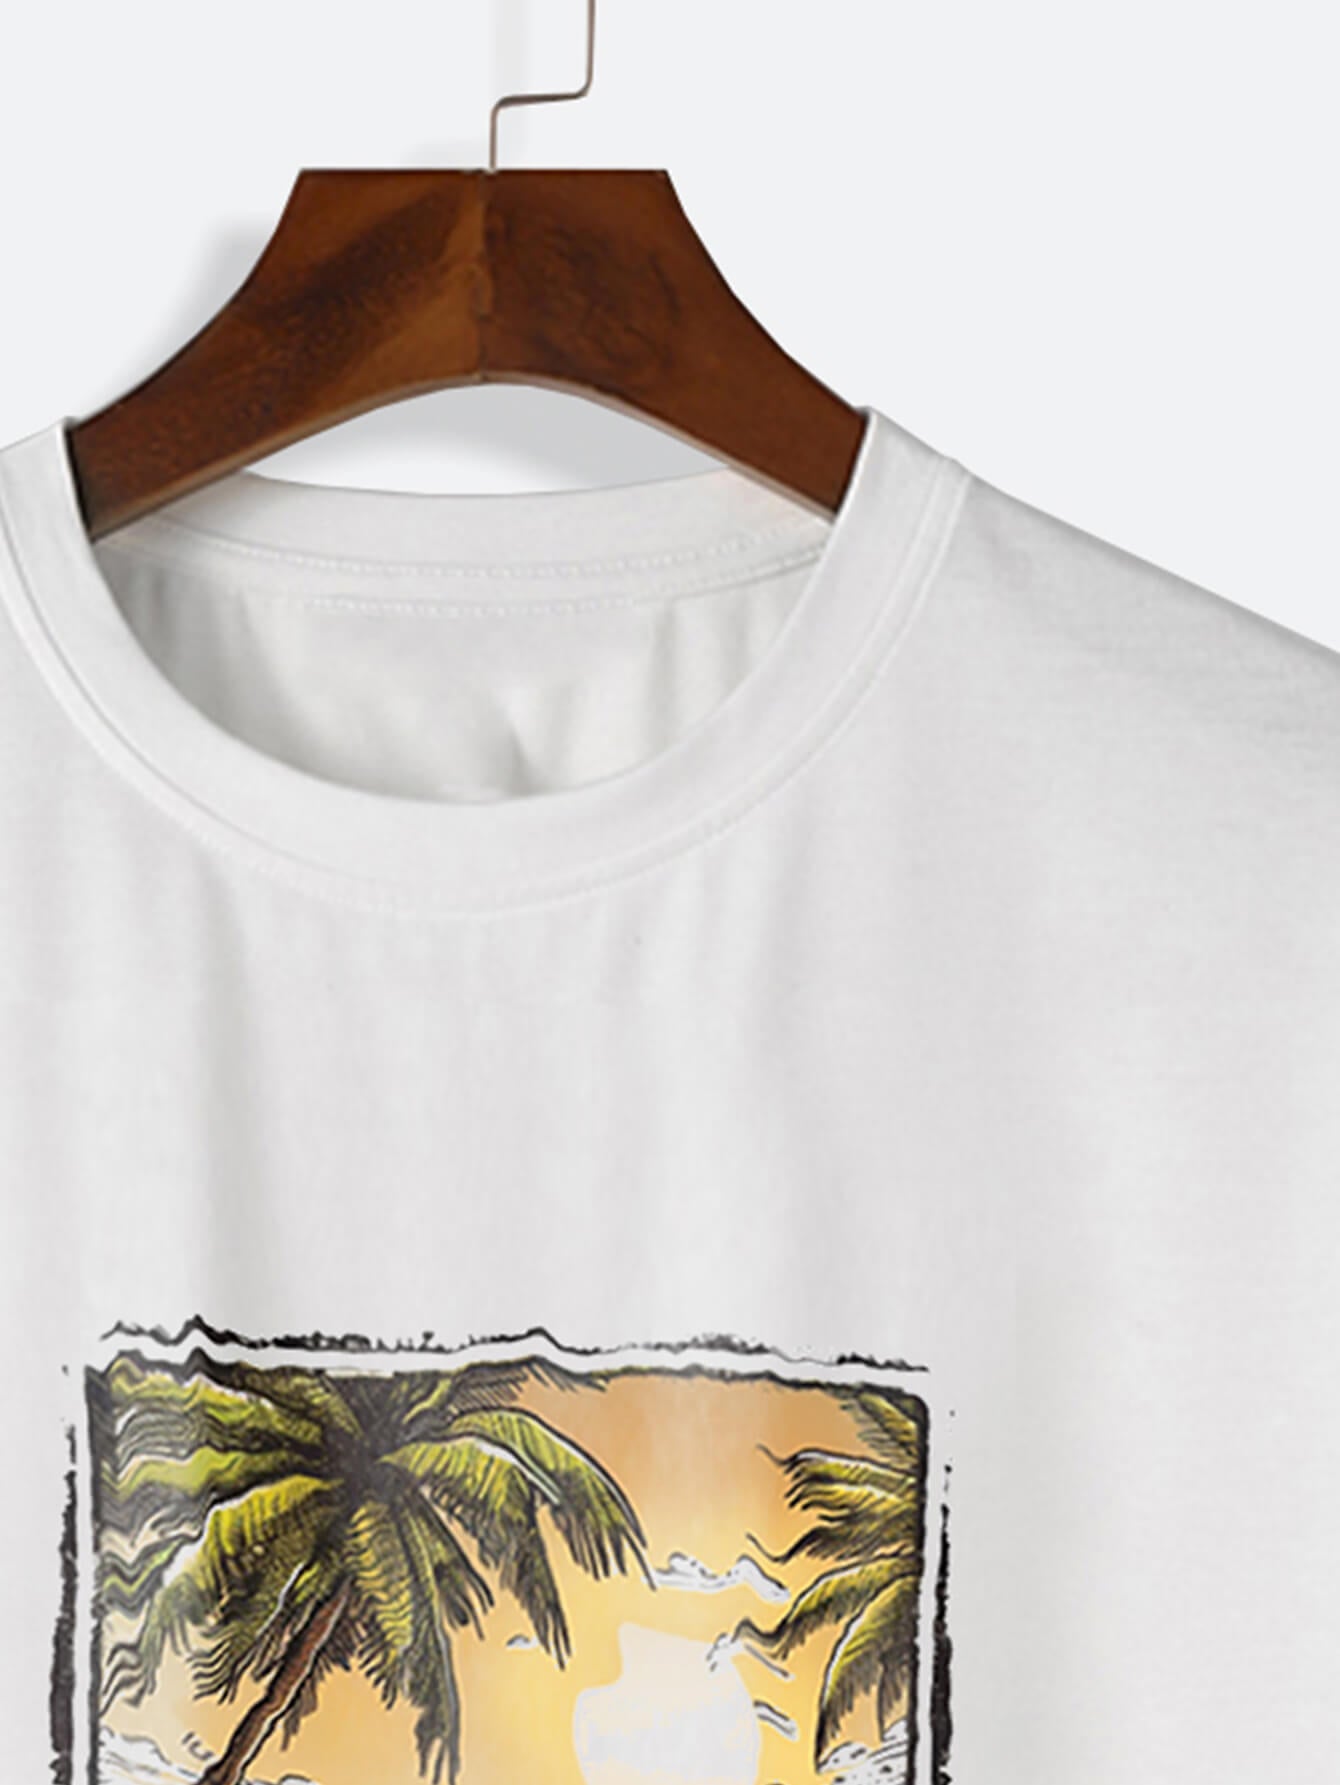 100% Cotton Hawaiian T-Shirt Beer Beach Print Short Sleeve